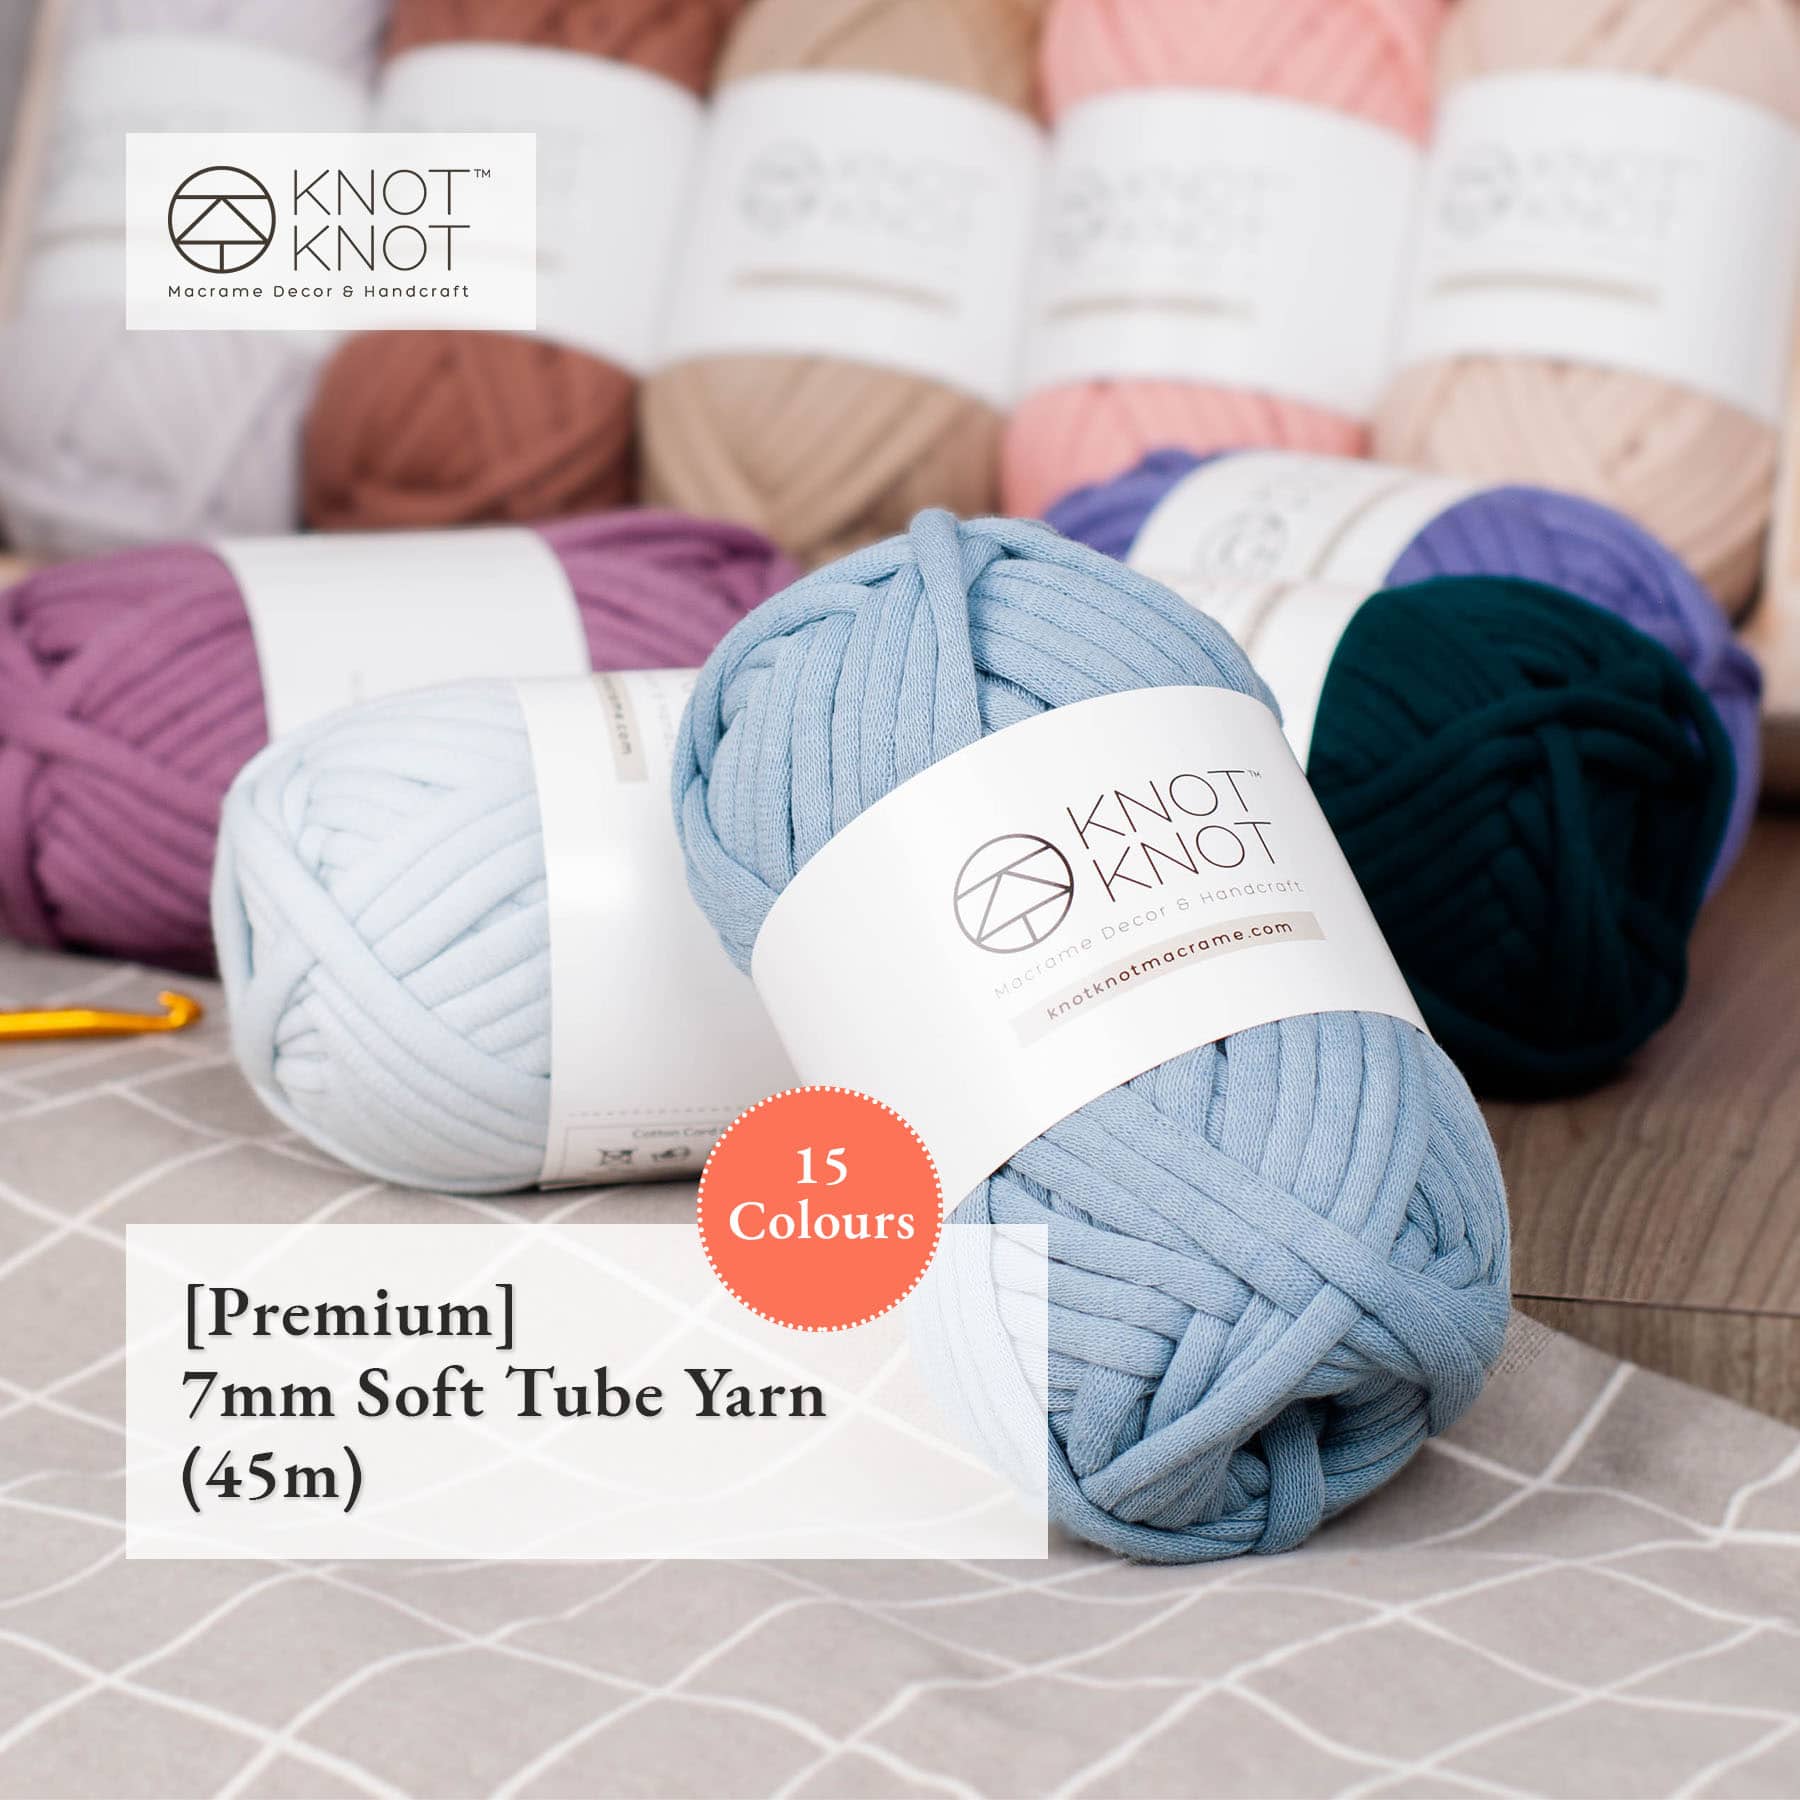 Premium] Soft 7mm Tube Yarn (45m) Macrame Rope DIY Handcraft, Yarn, Decor, Fiber Art Supply, Crochet